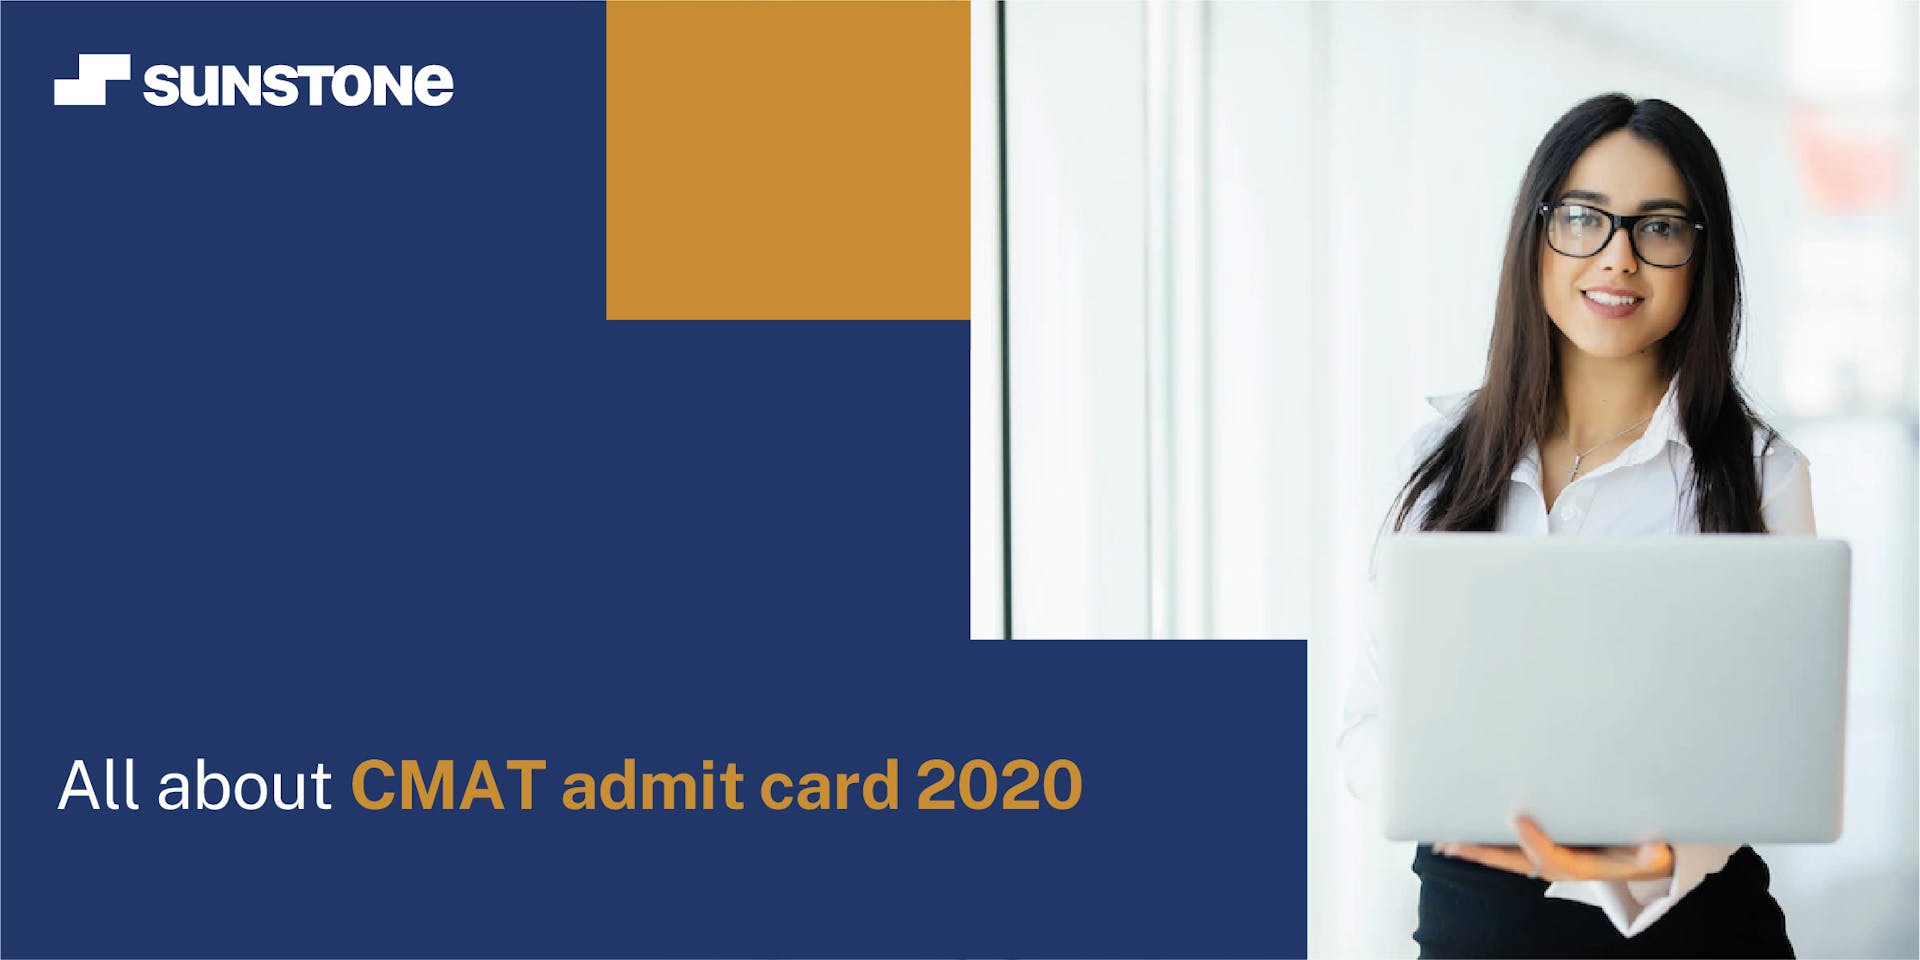 Details about CMAT exam admit card